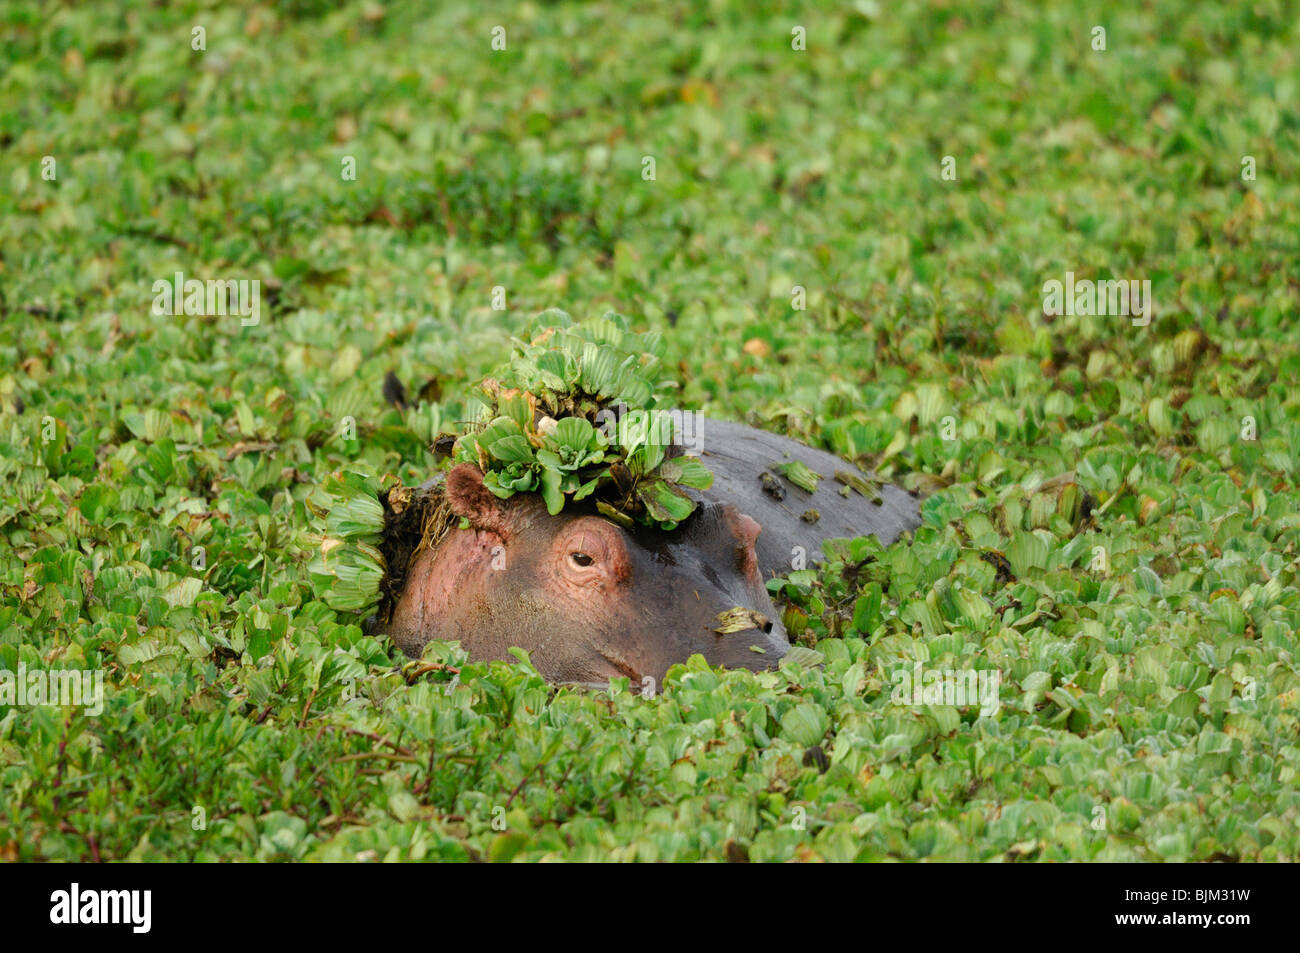 Flusspferd (Hippopotamus Amphibius) Kopf in einem grünen Teich entstehen. Masai Mara Nationalpark, Kenia Stockfoto